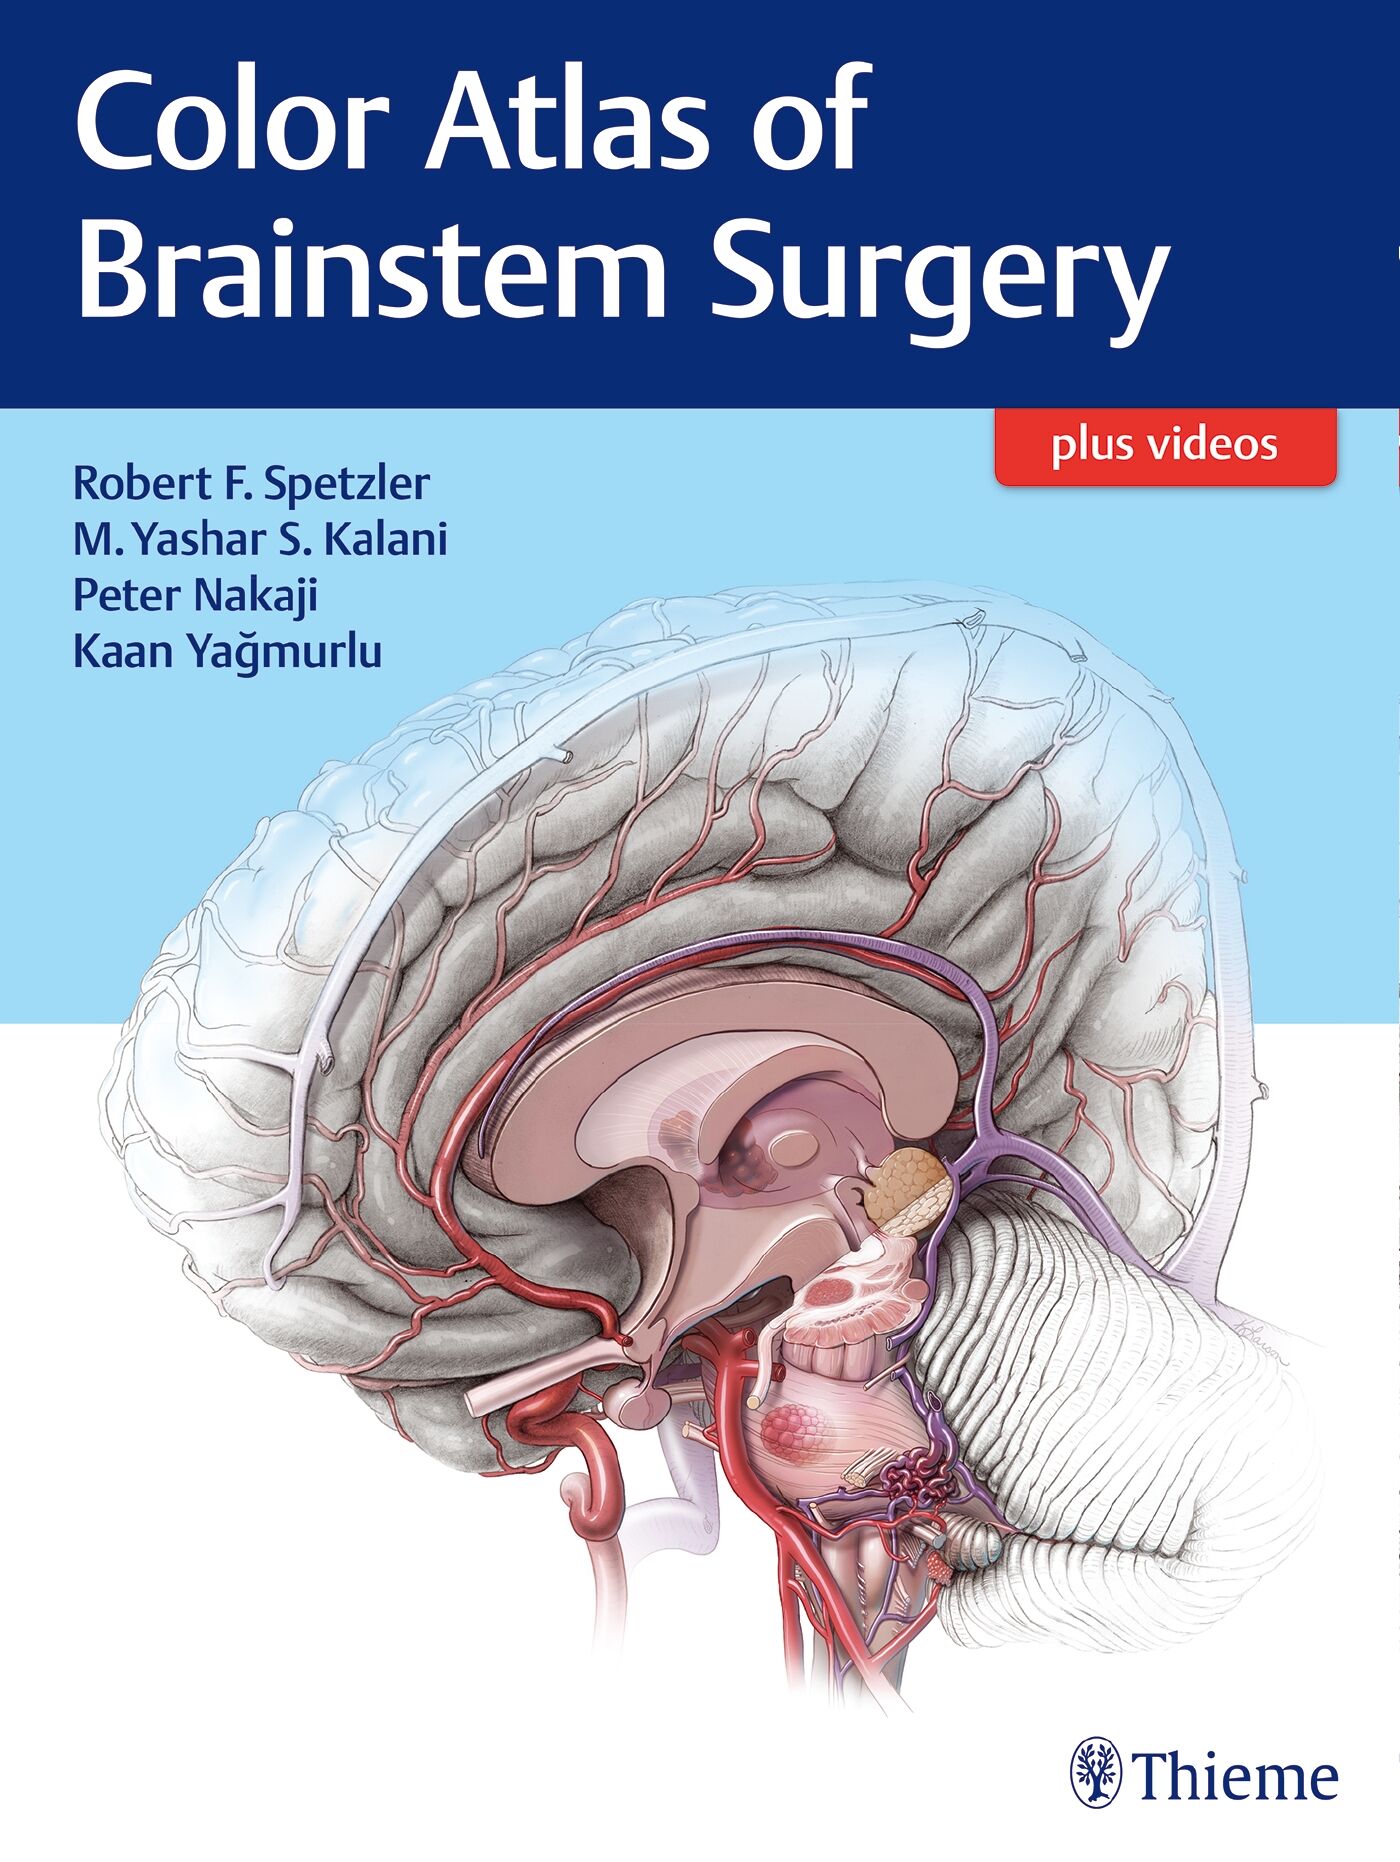 Color Atlas of Brainstem Surgery, 9781626230279